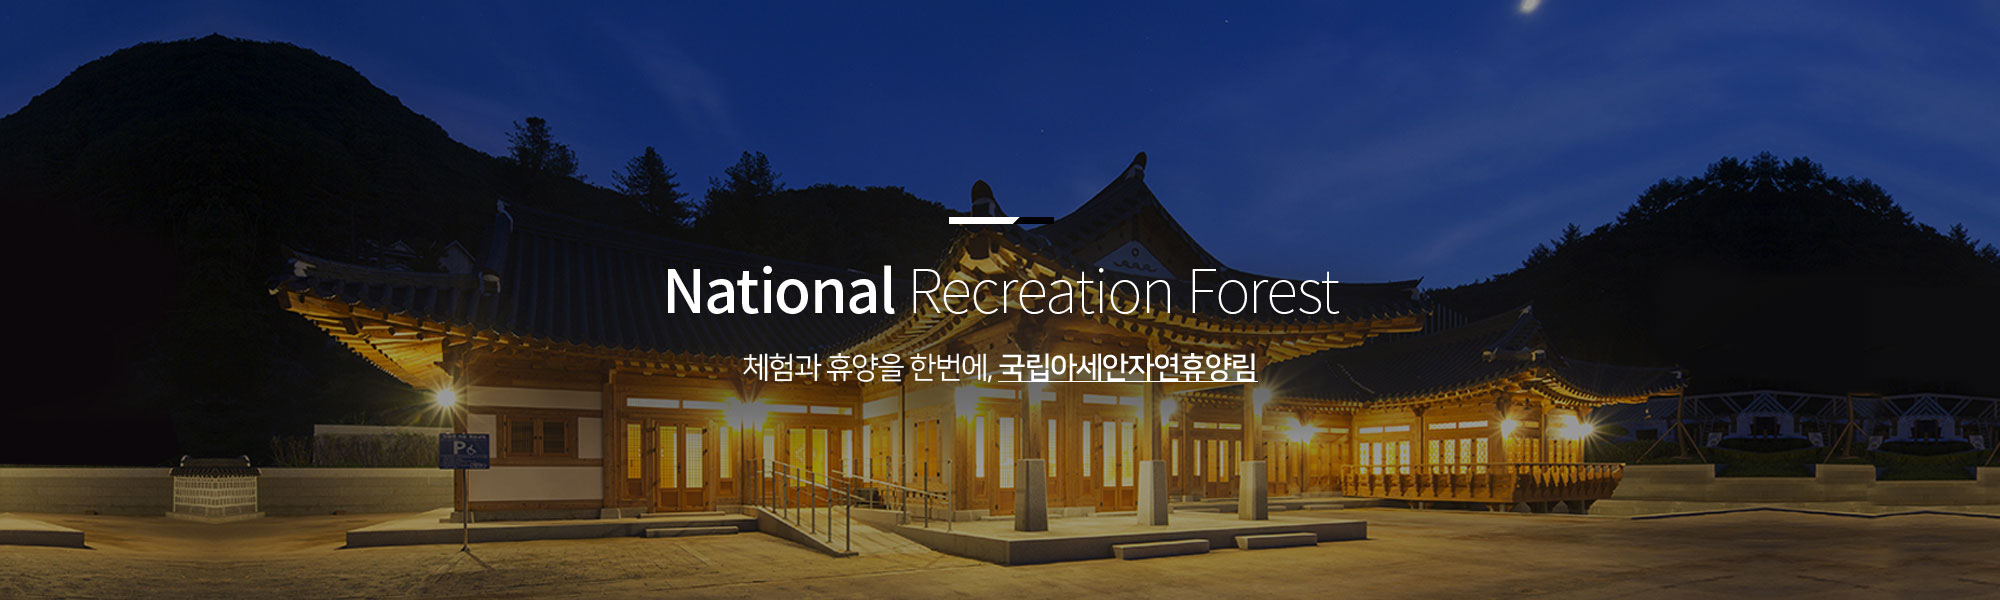 National Recreation Forest 체험과 휴양을 한번에, 국립아세안자연휴양림